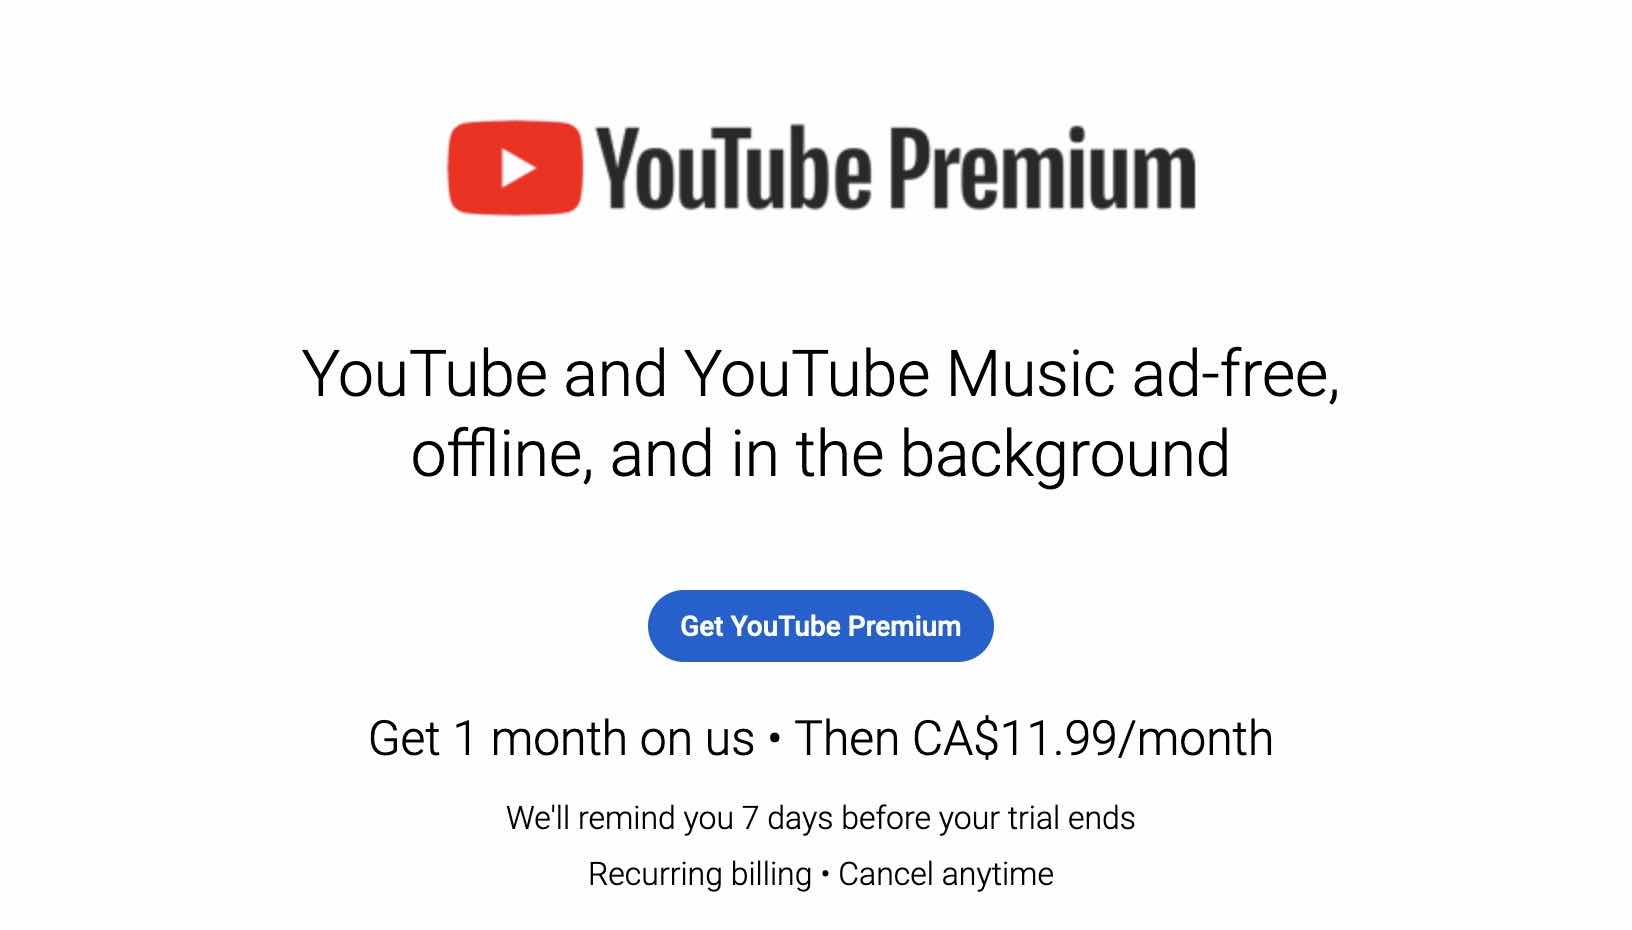 YouTube Premium cost in Canada